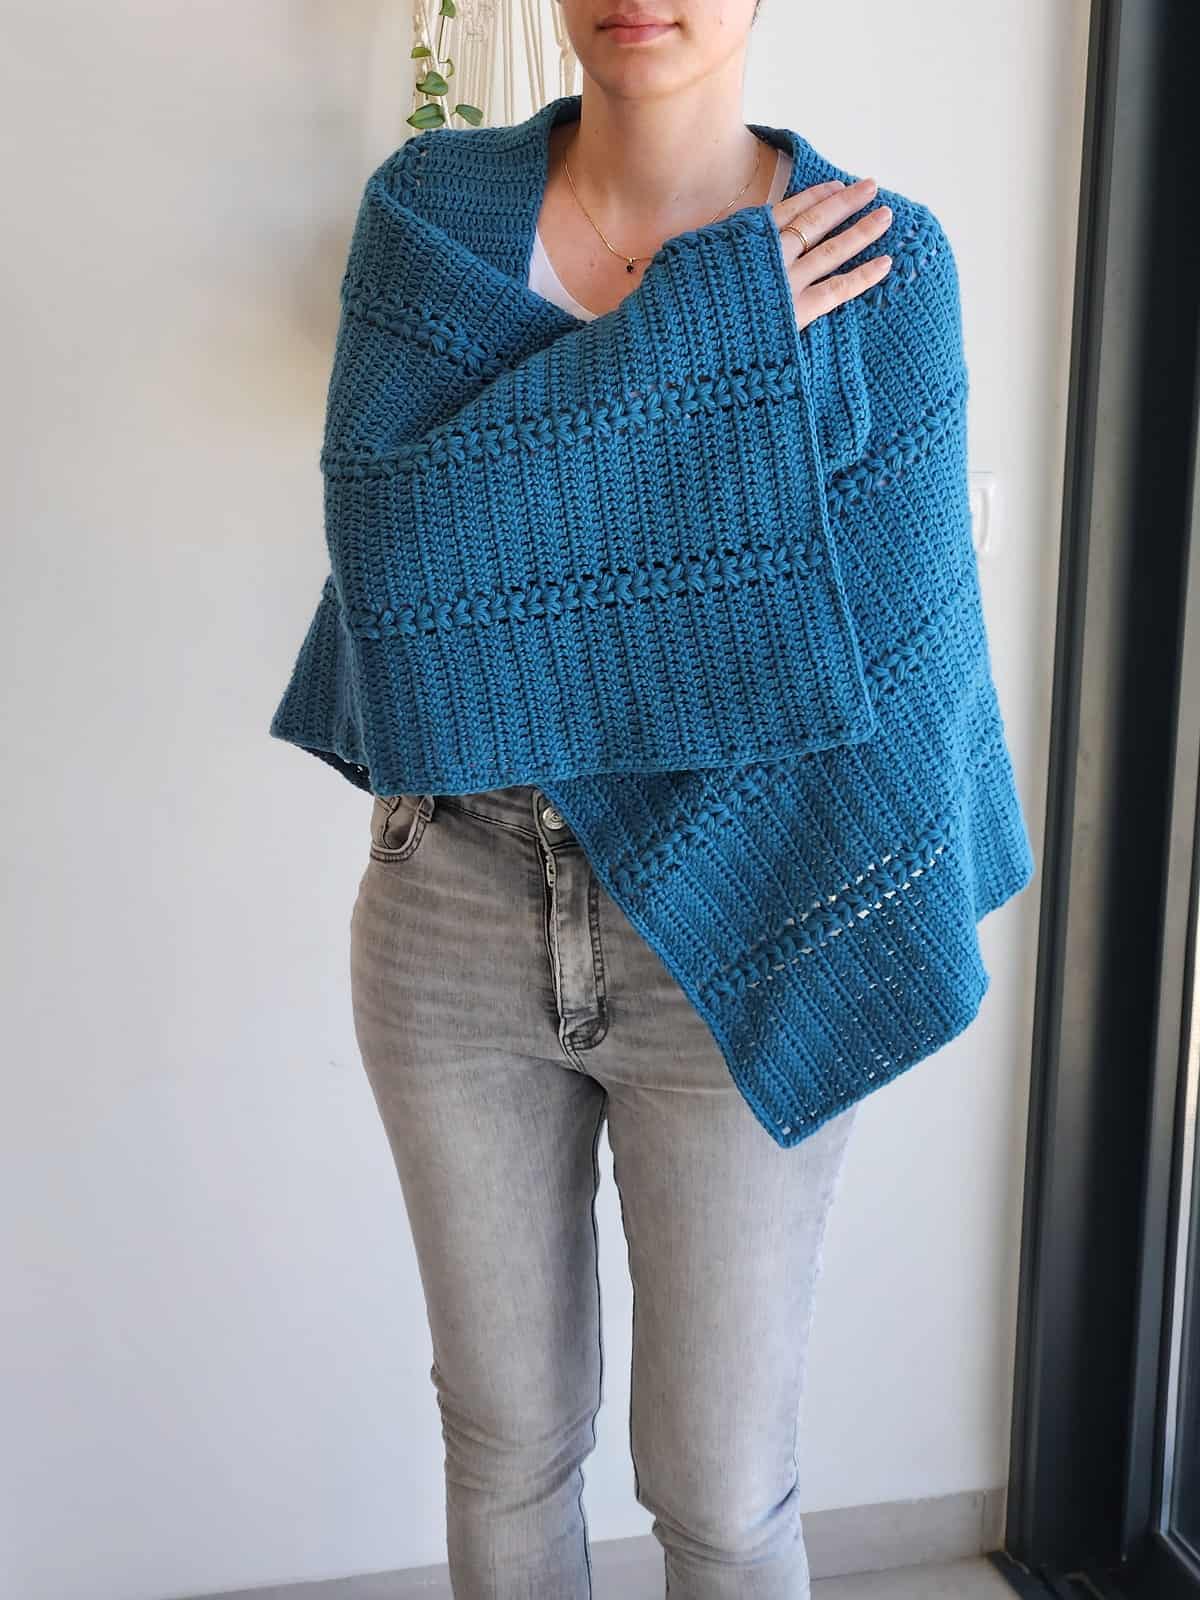 shawl wrap crochet pattern